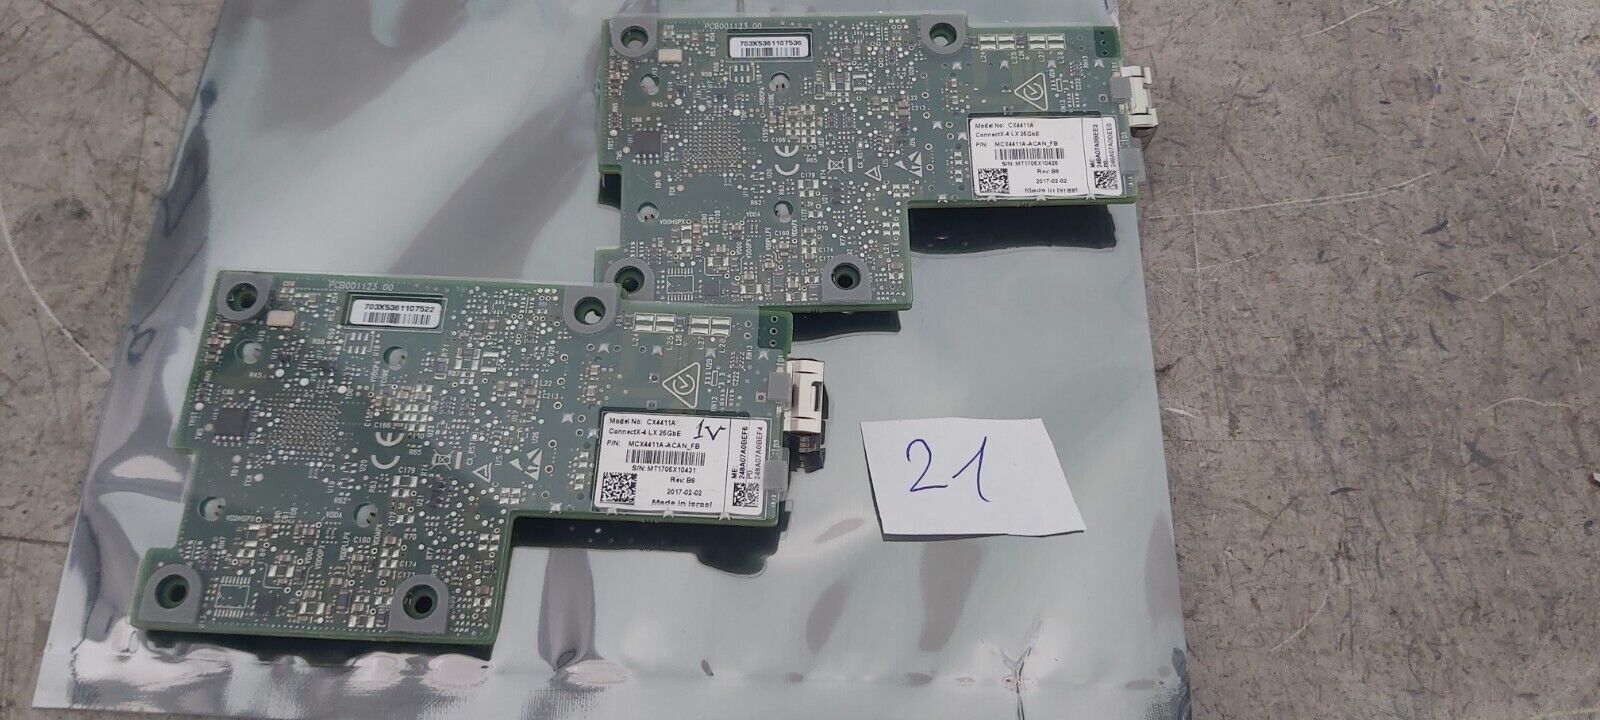 Lot of 2 Mellanox Nvidia MCX4411A-ACAN_FB Adapter #21-1 Make Offers UPS Ship